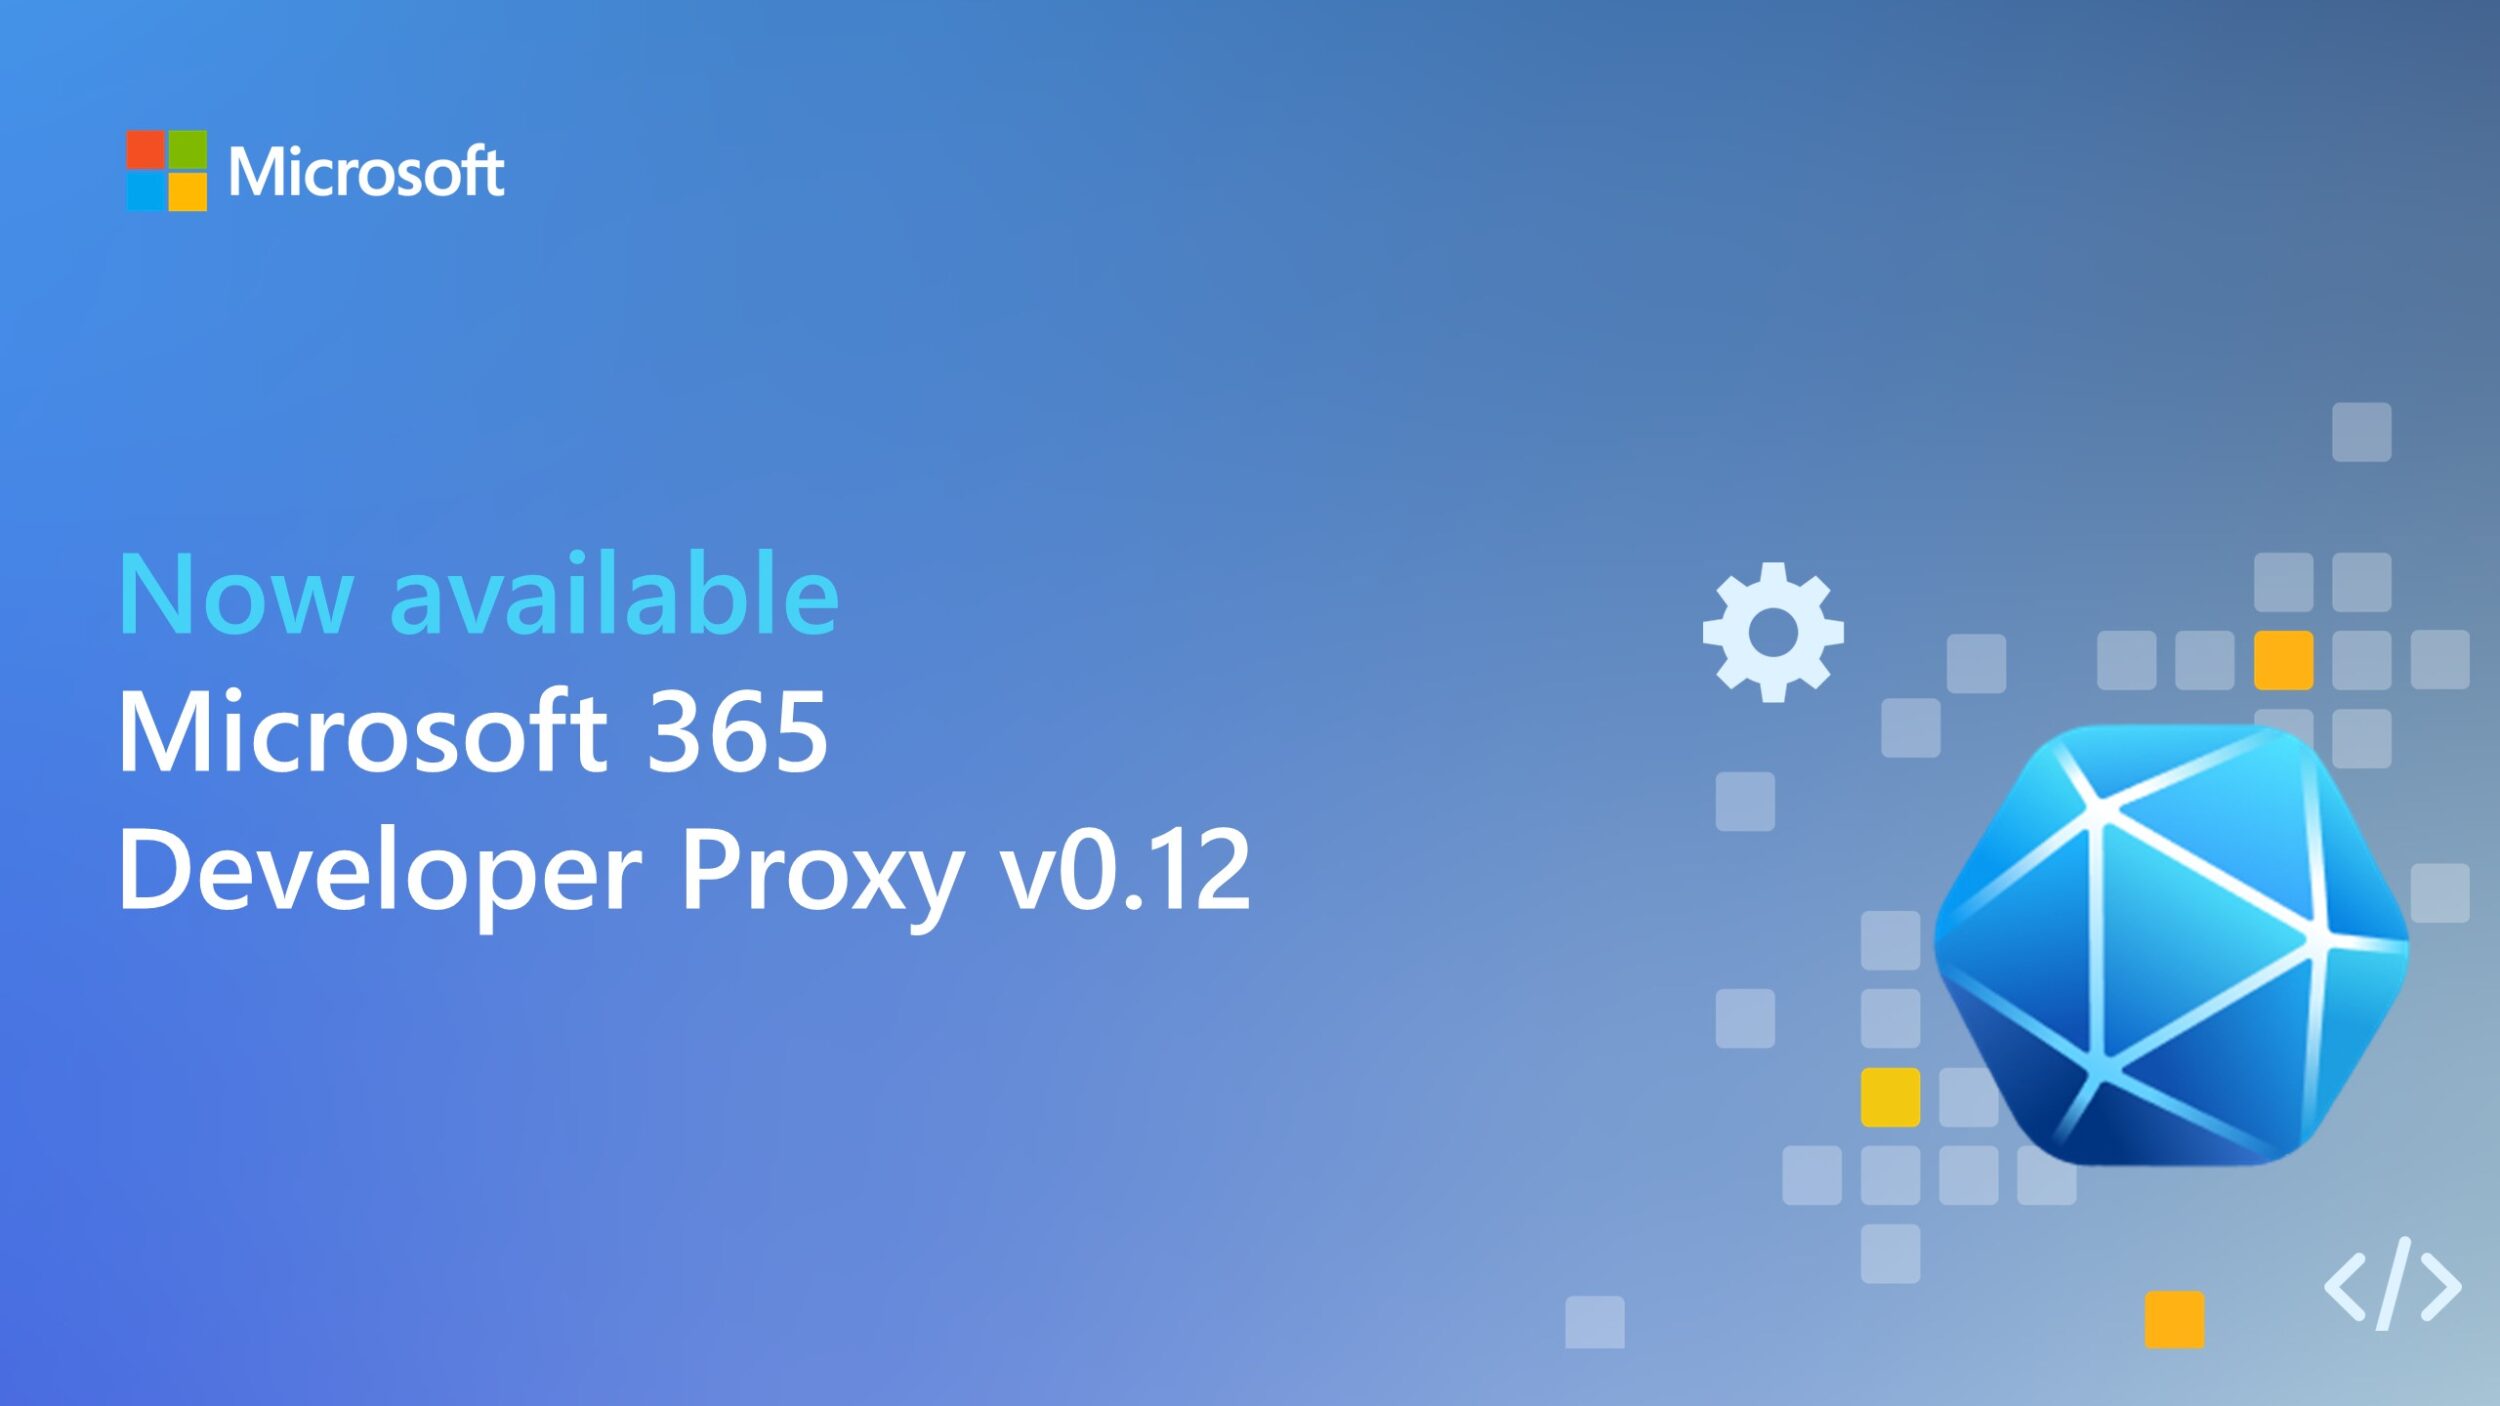 Microsoft 365 Developer Proxy v0.12 with new mocking capabilities